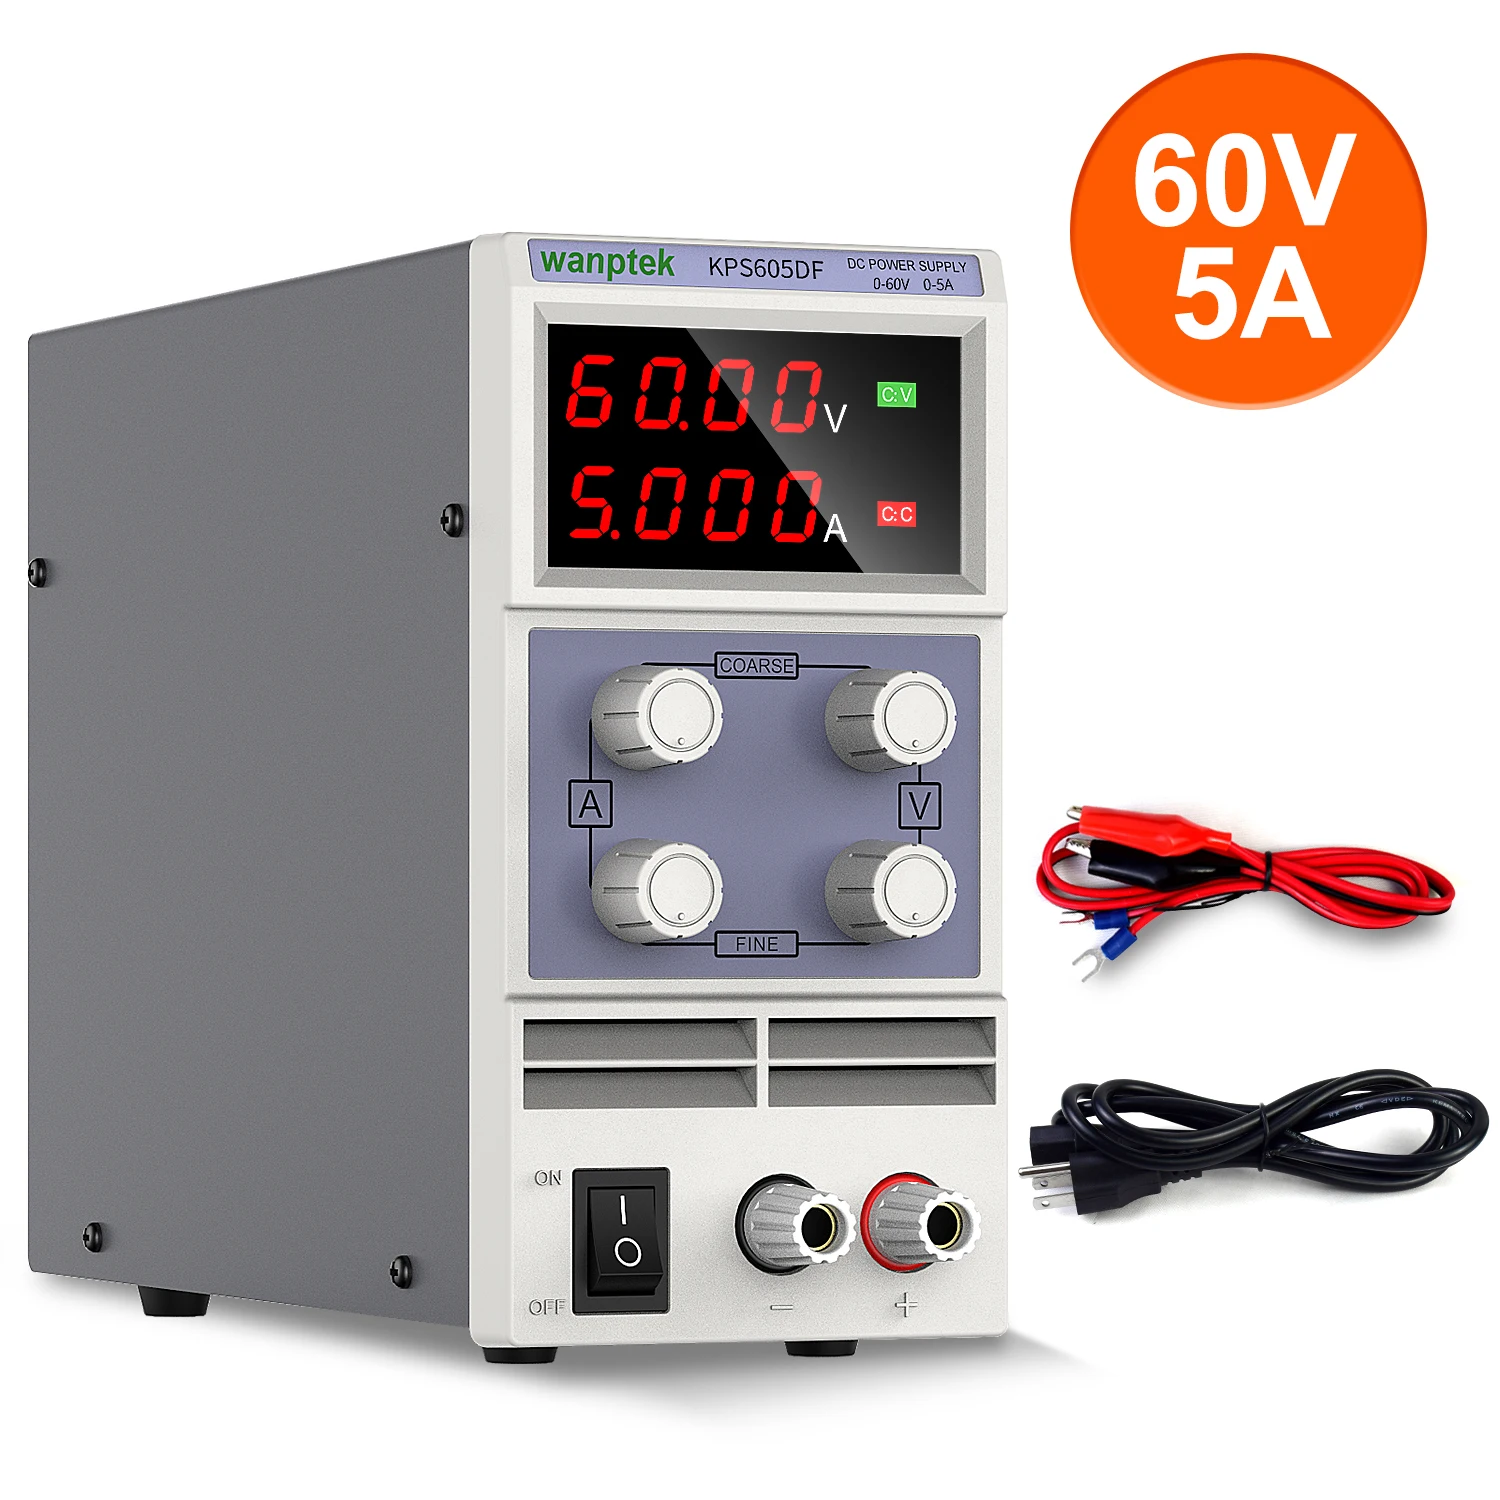 60V 5A DC Power Supply Adjustable Line Variable Digital Test Lab Grade Cable 